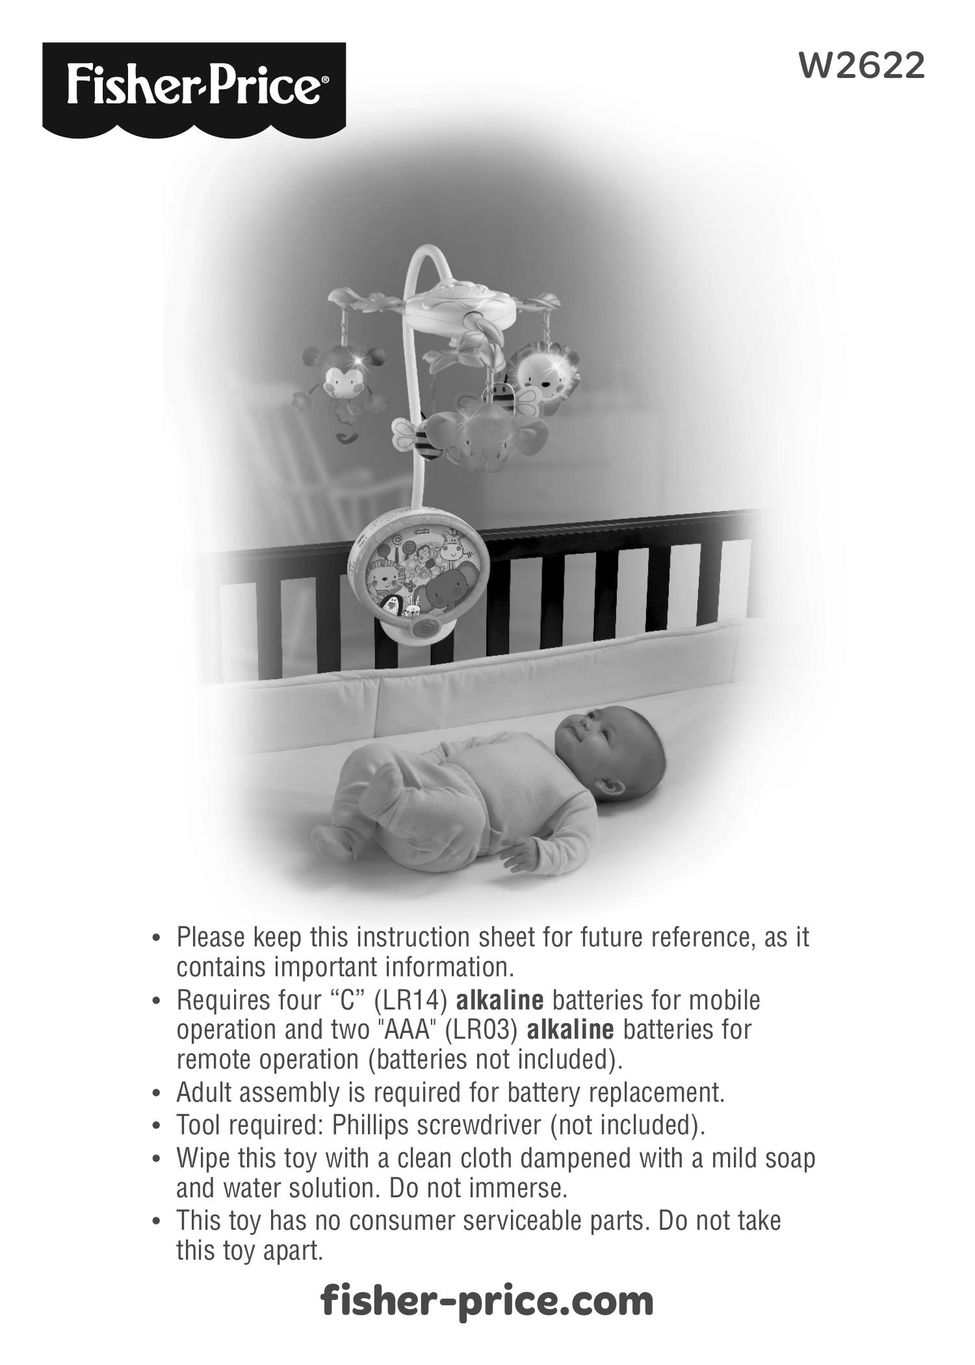 Fisher-Price W2622 Crib Toy User Manual